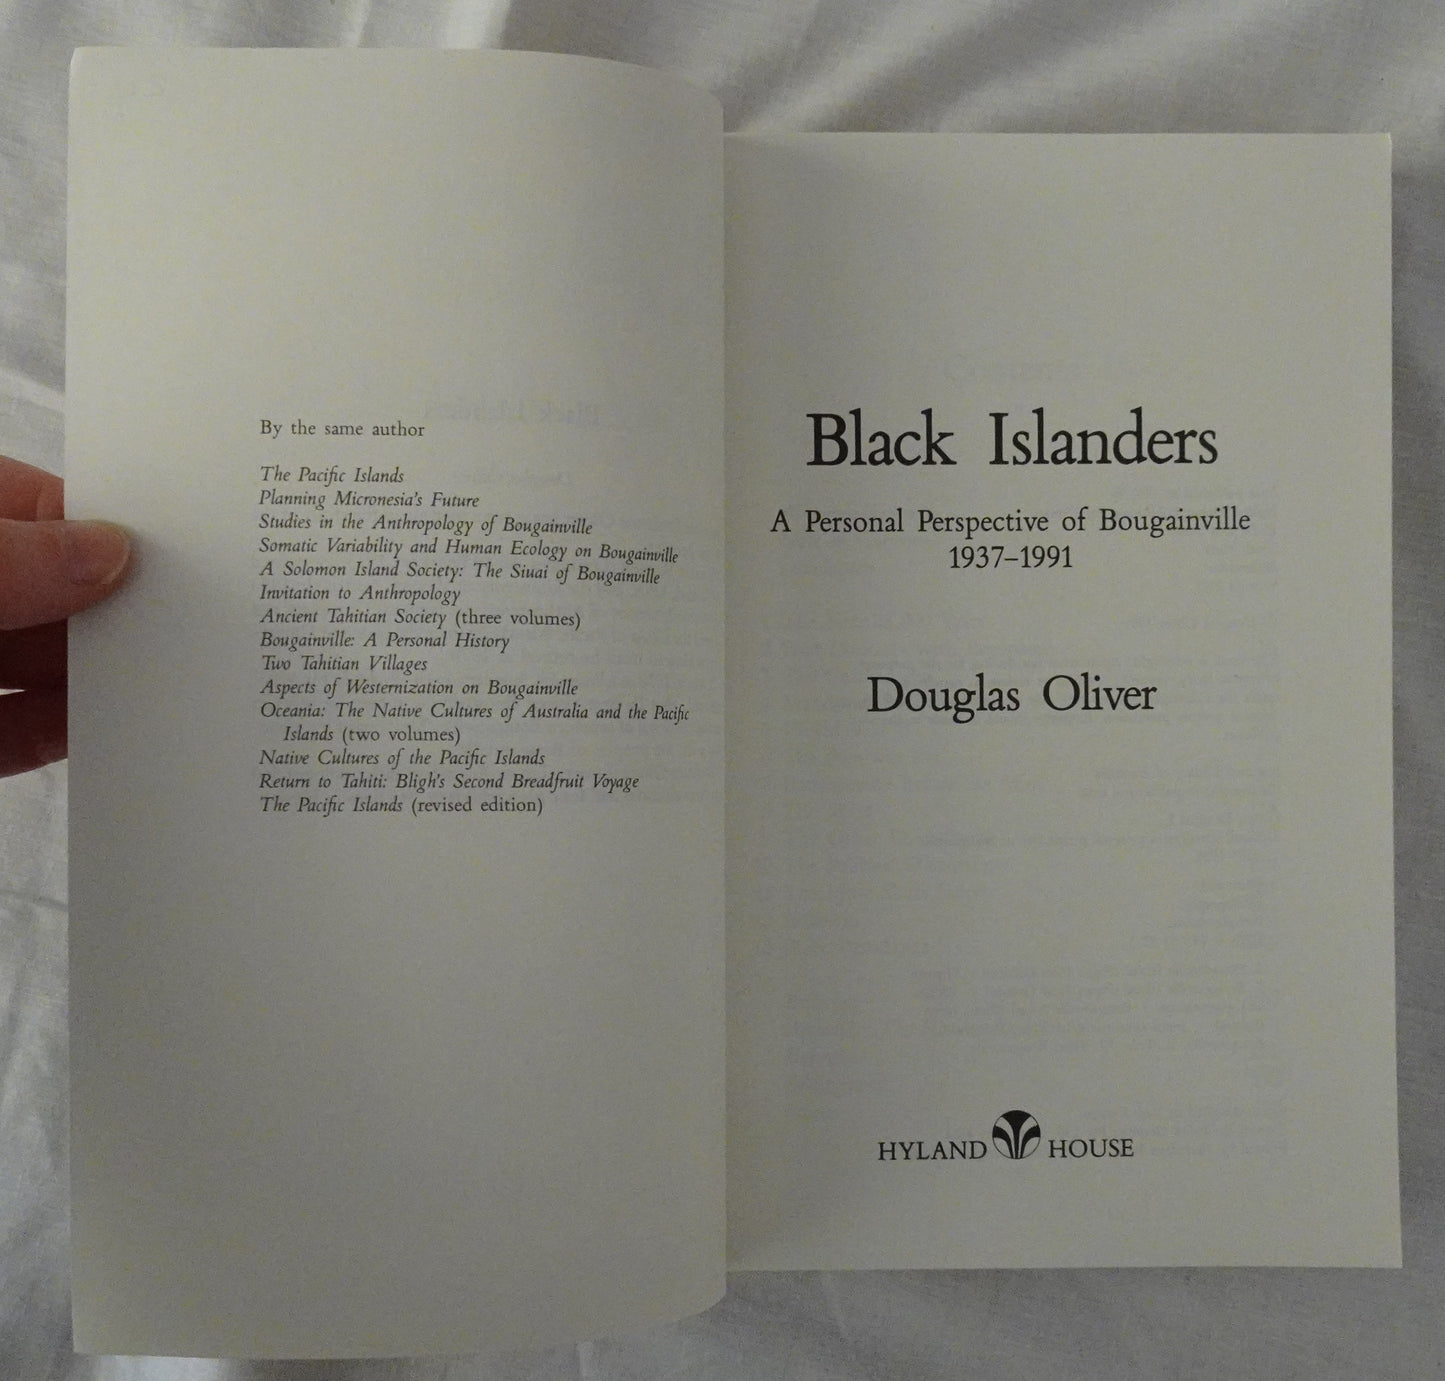 Black Islanders by Douglas Oliver